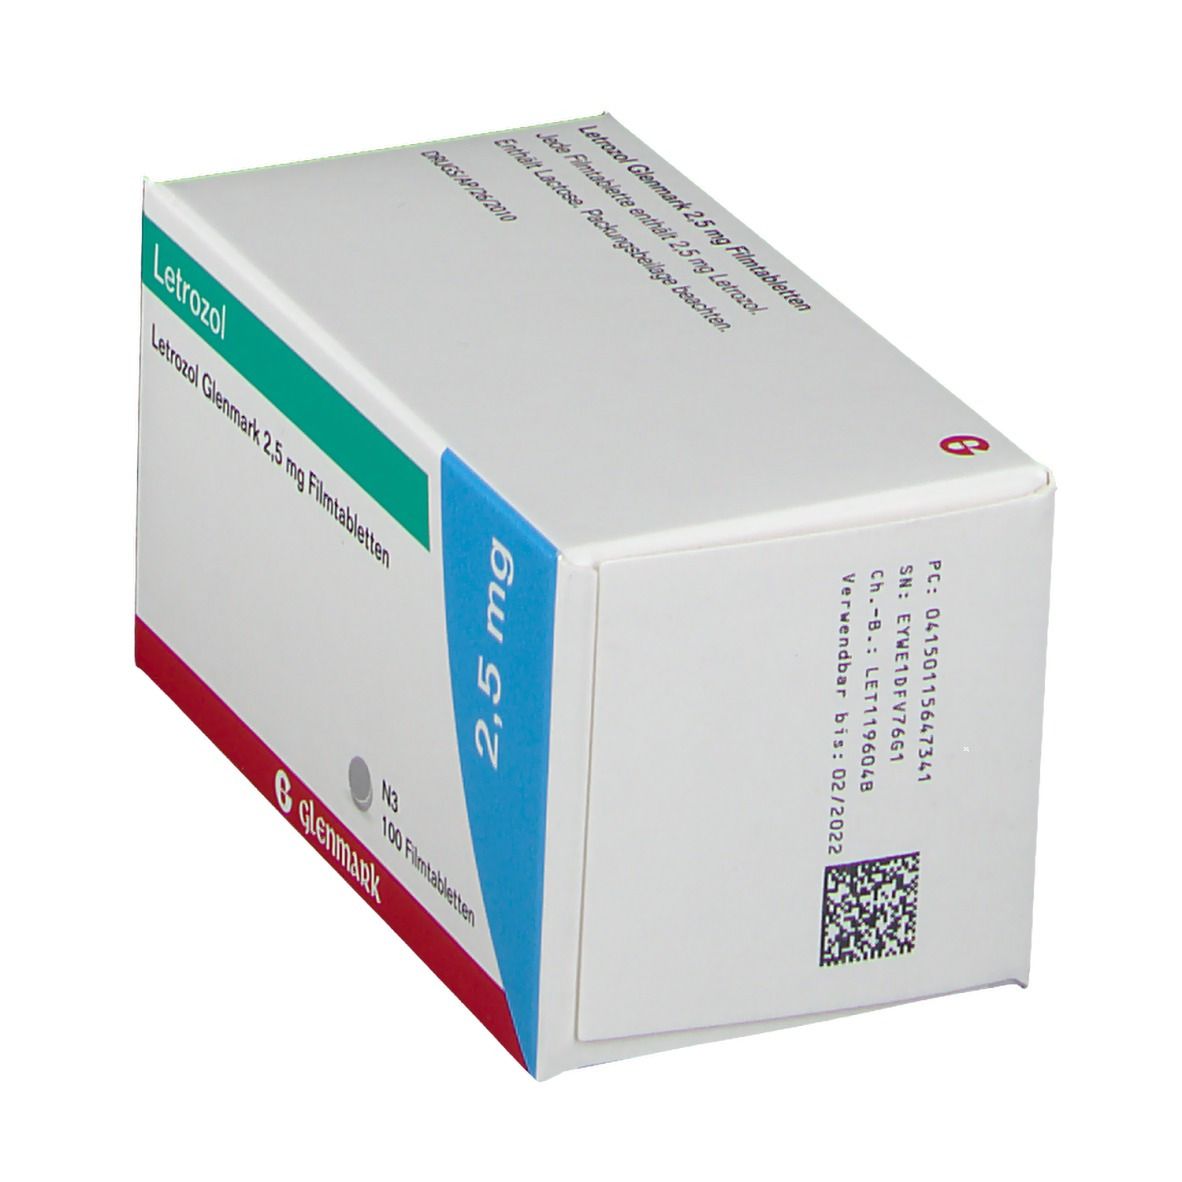 Letrozol Glenmark 2,5 mg